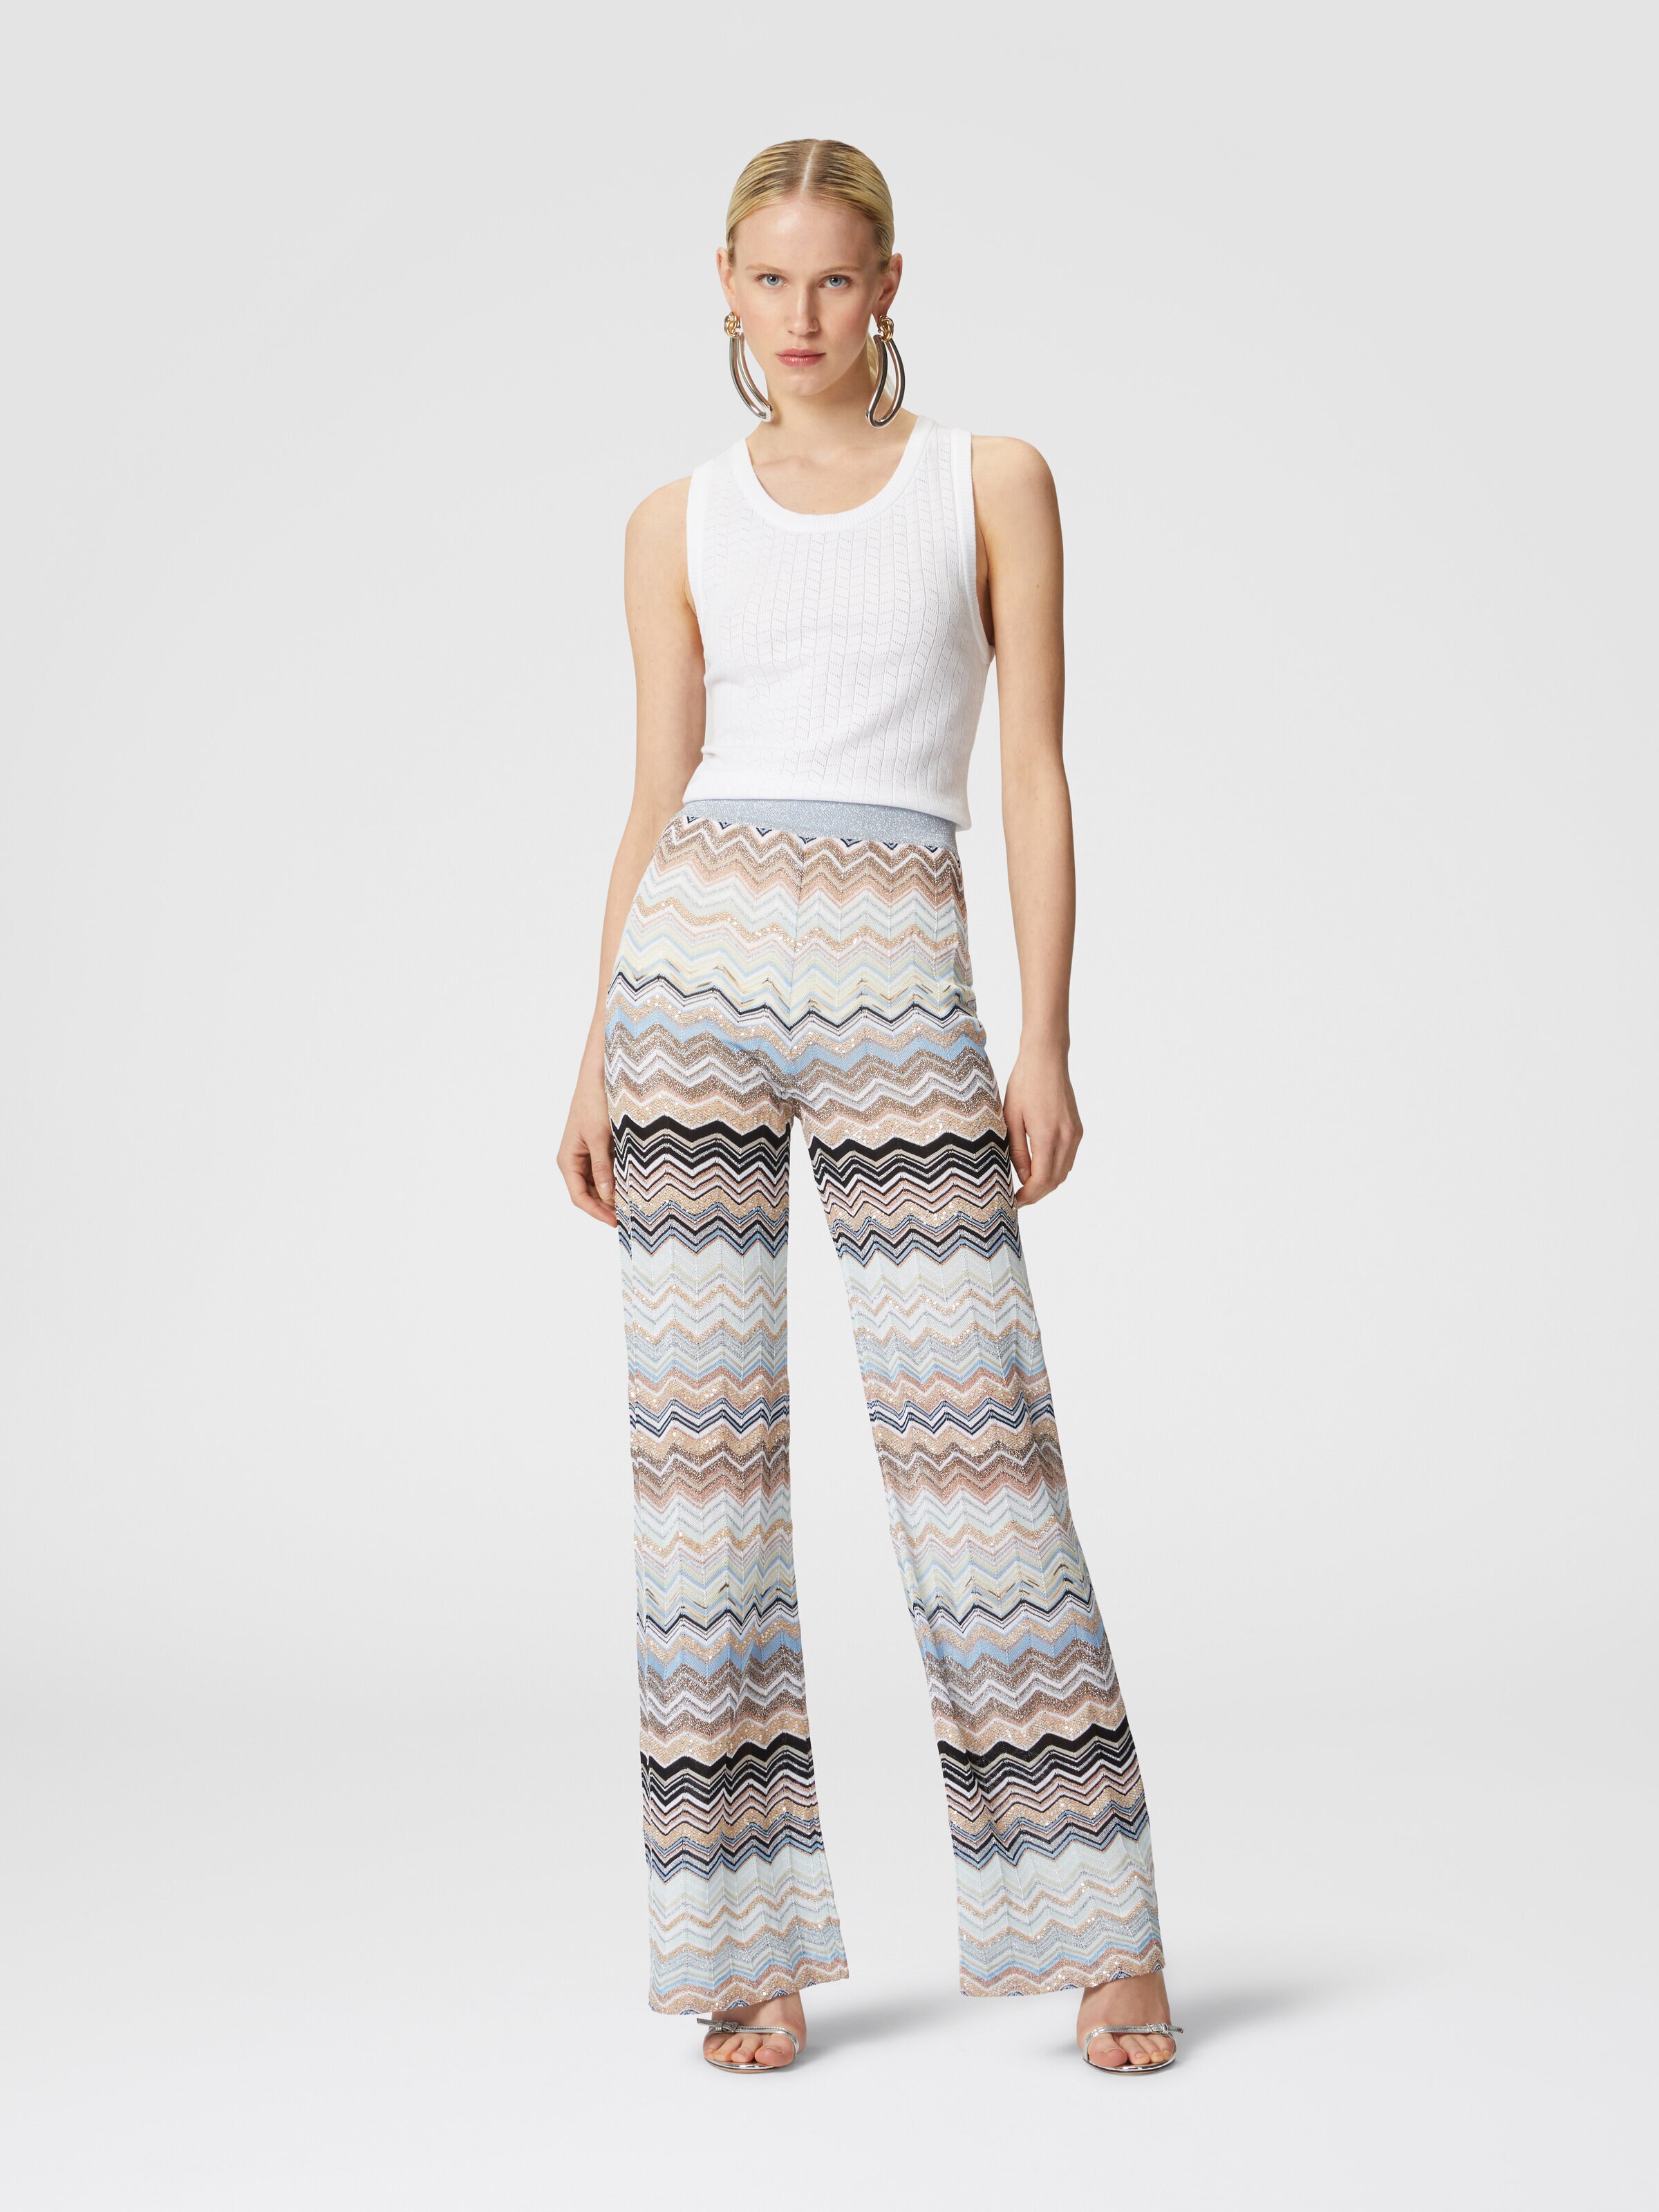 Chevron lamé knit trousers with sequins, Multicoloured  - 1